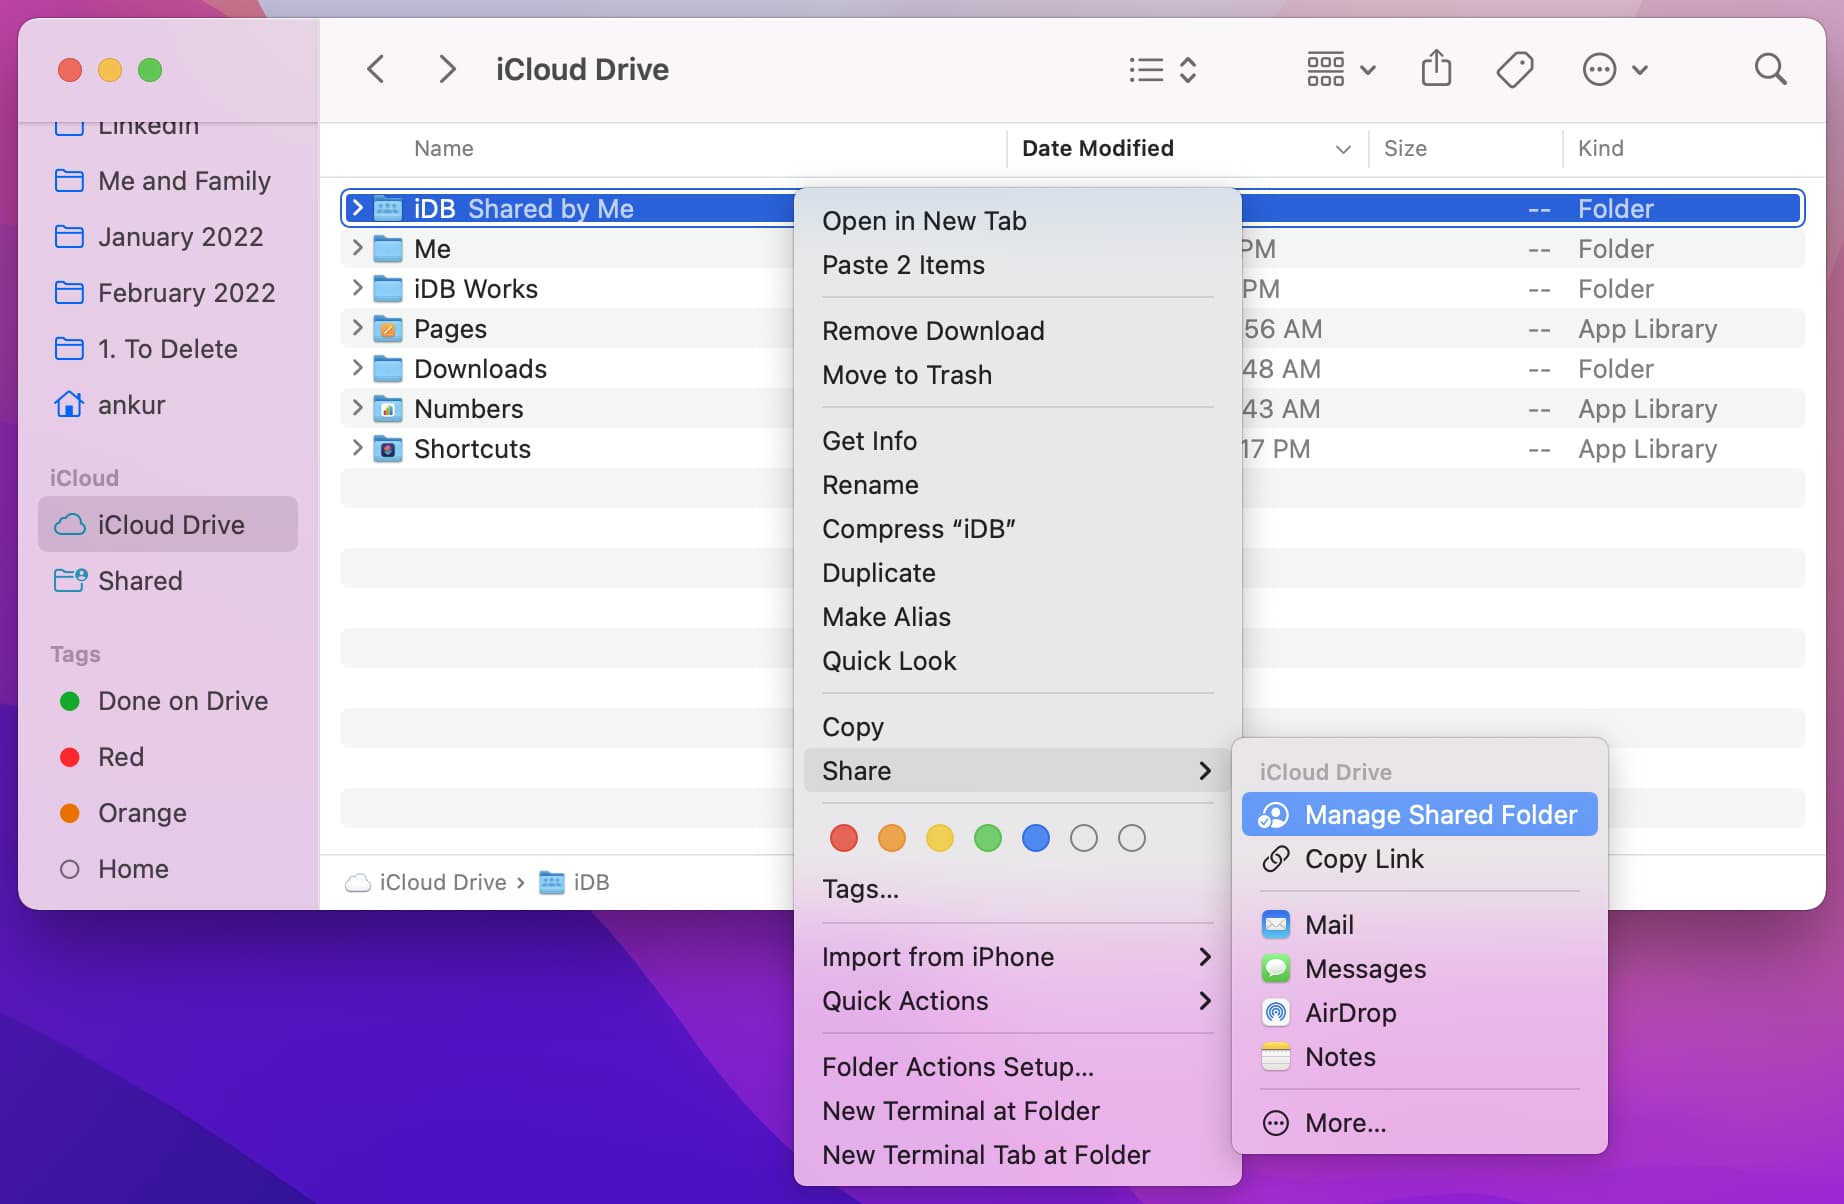 Manage Shared Folder in iCloud Drive on Mac